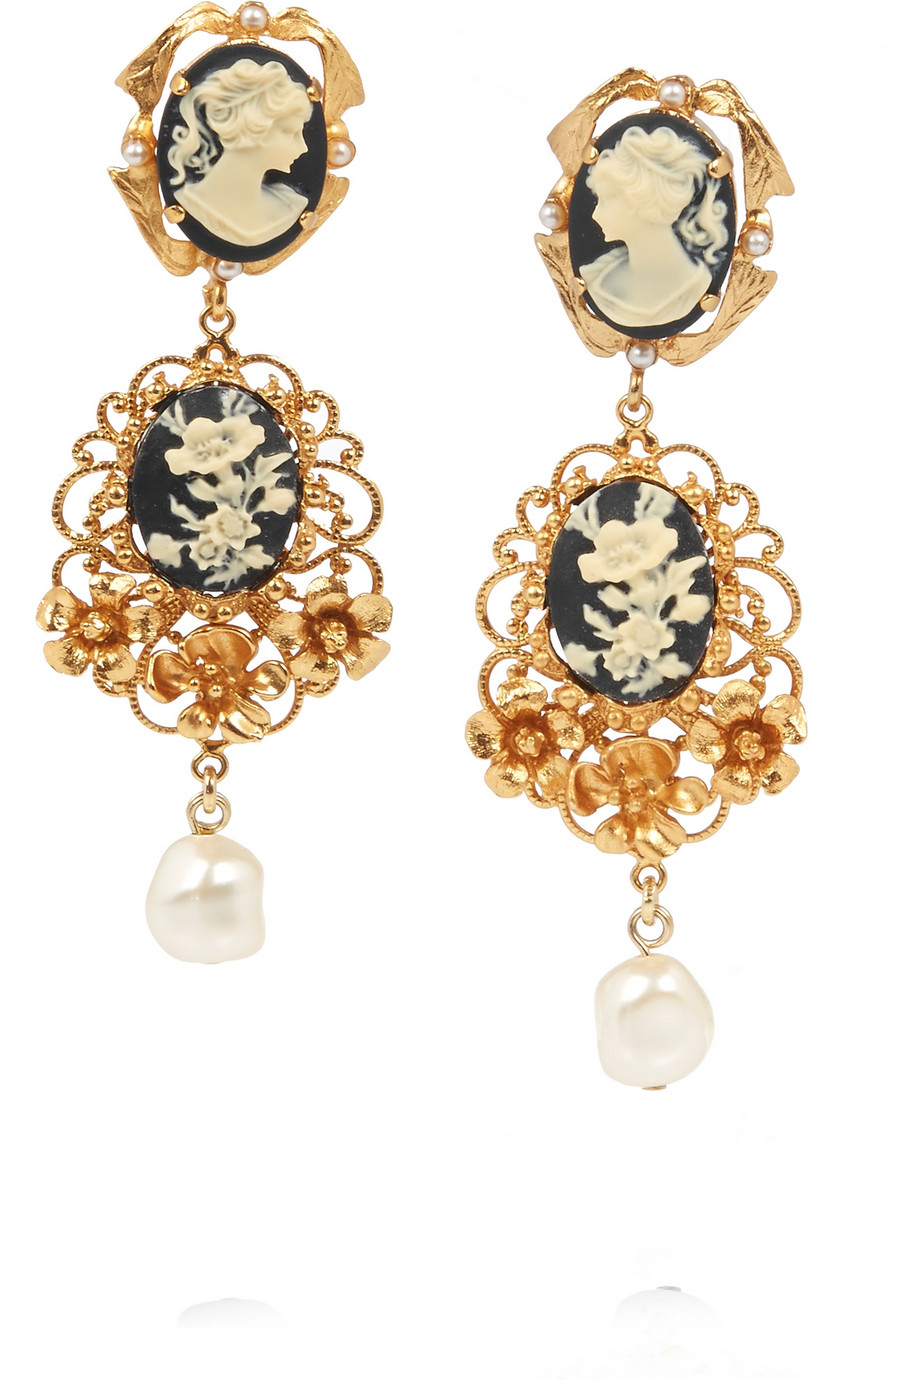 Dolce \u0026 Gabbana's cameo clip earrings